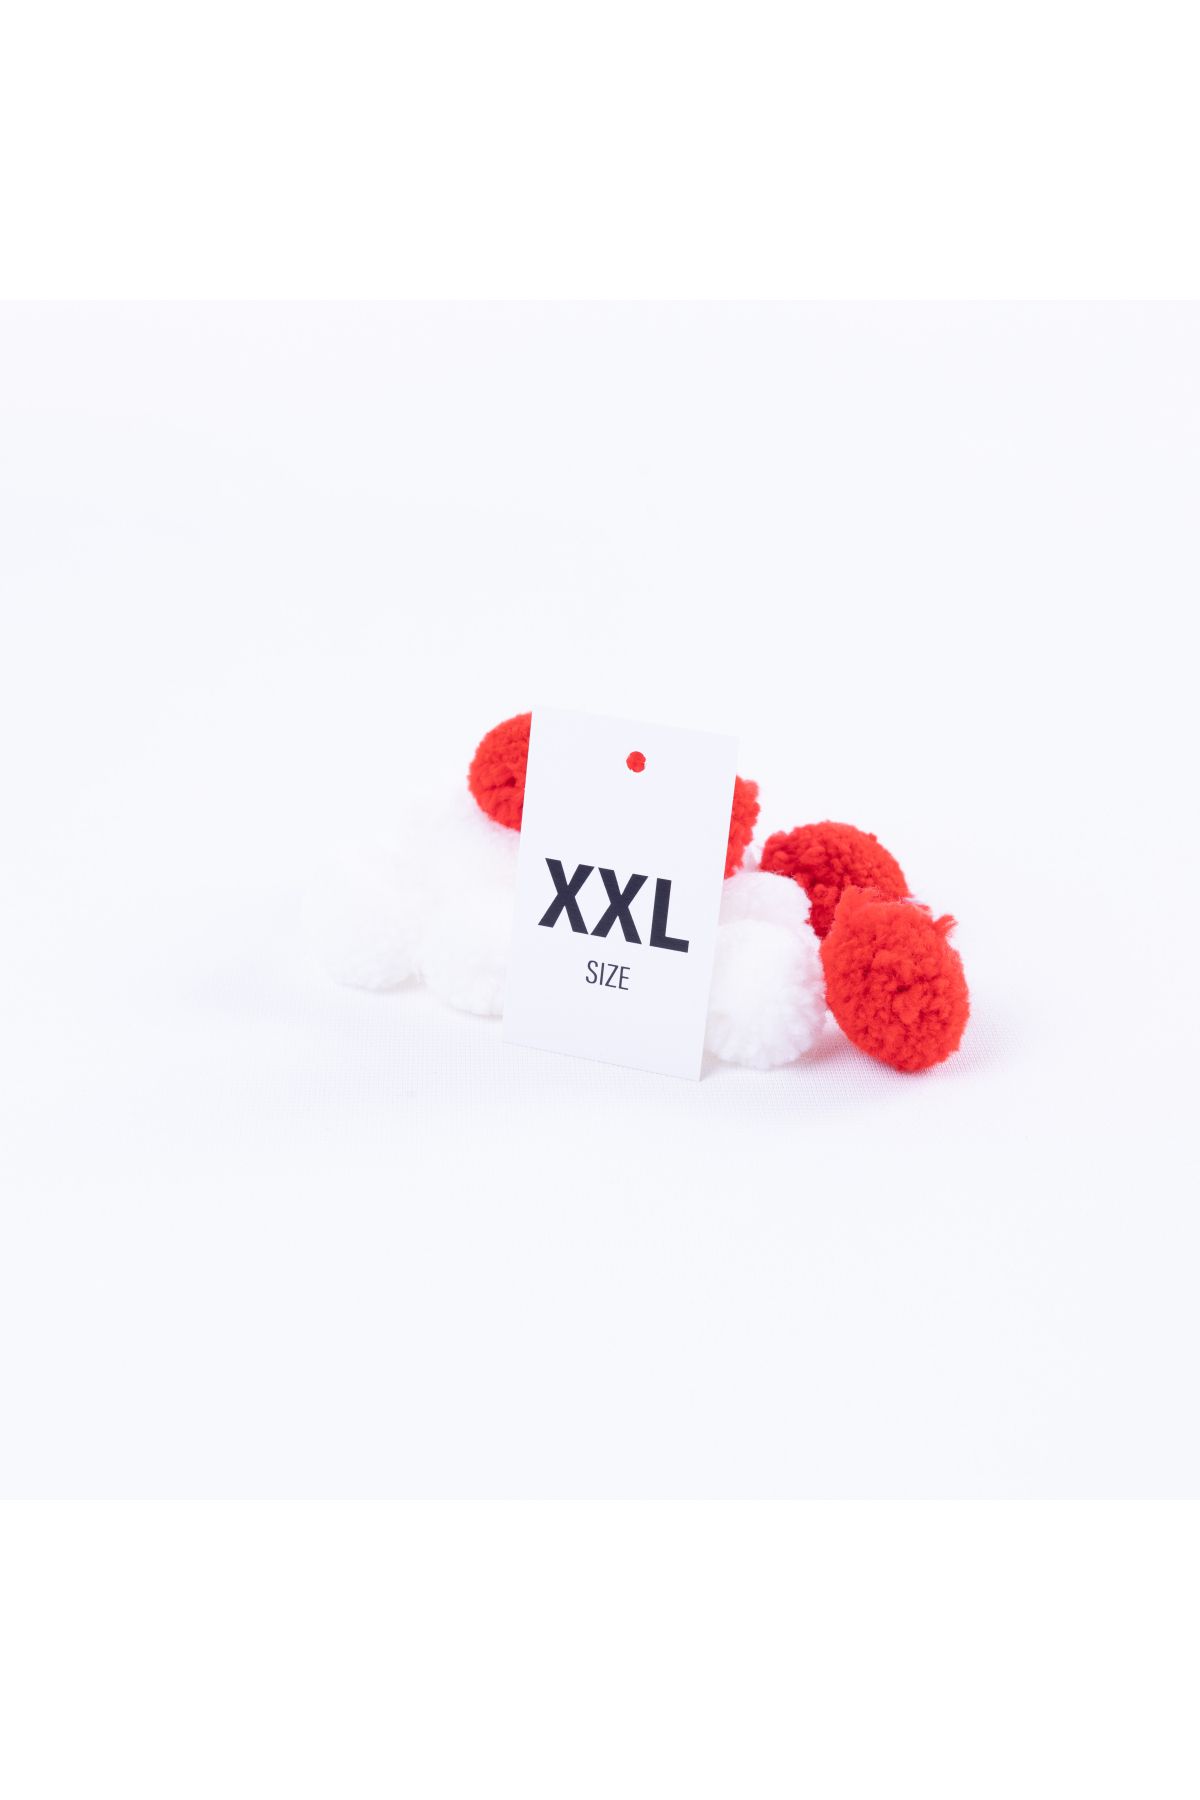 Bimotif Xxl Delikli, Beyaz Beden Etiketi Seti, 4 X 6 Cm 50 Adet